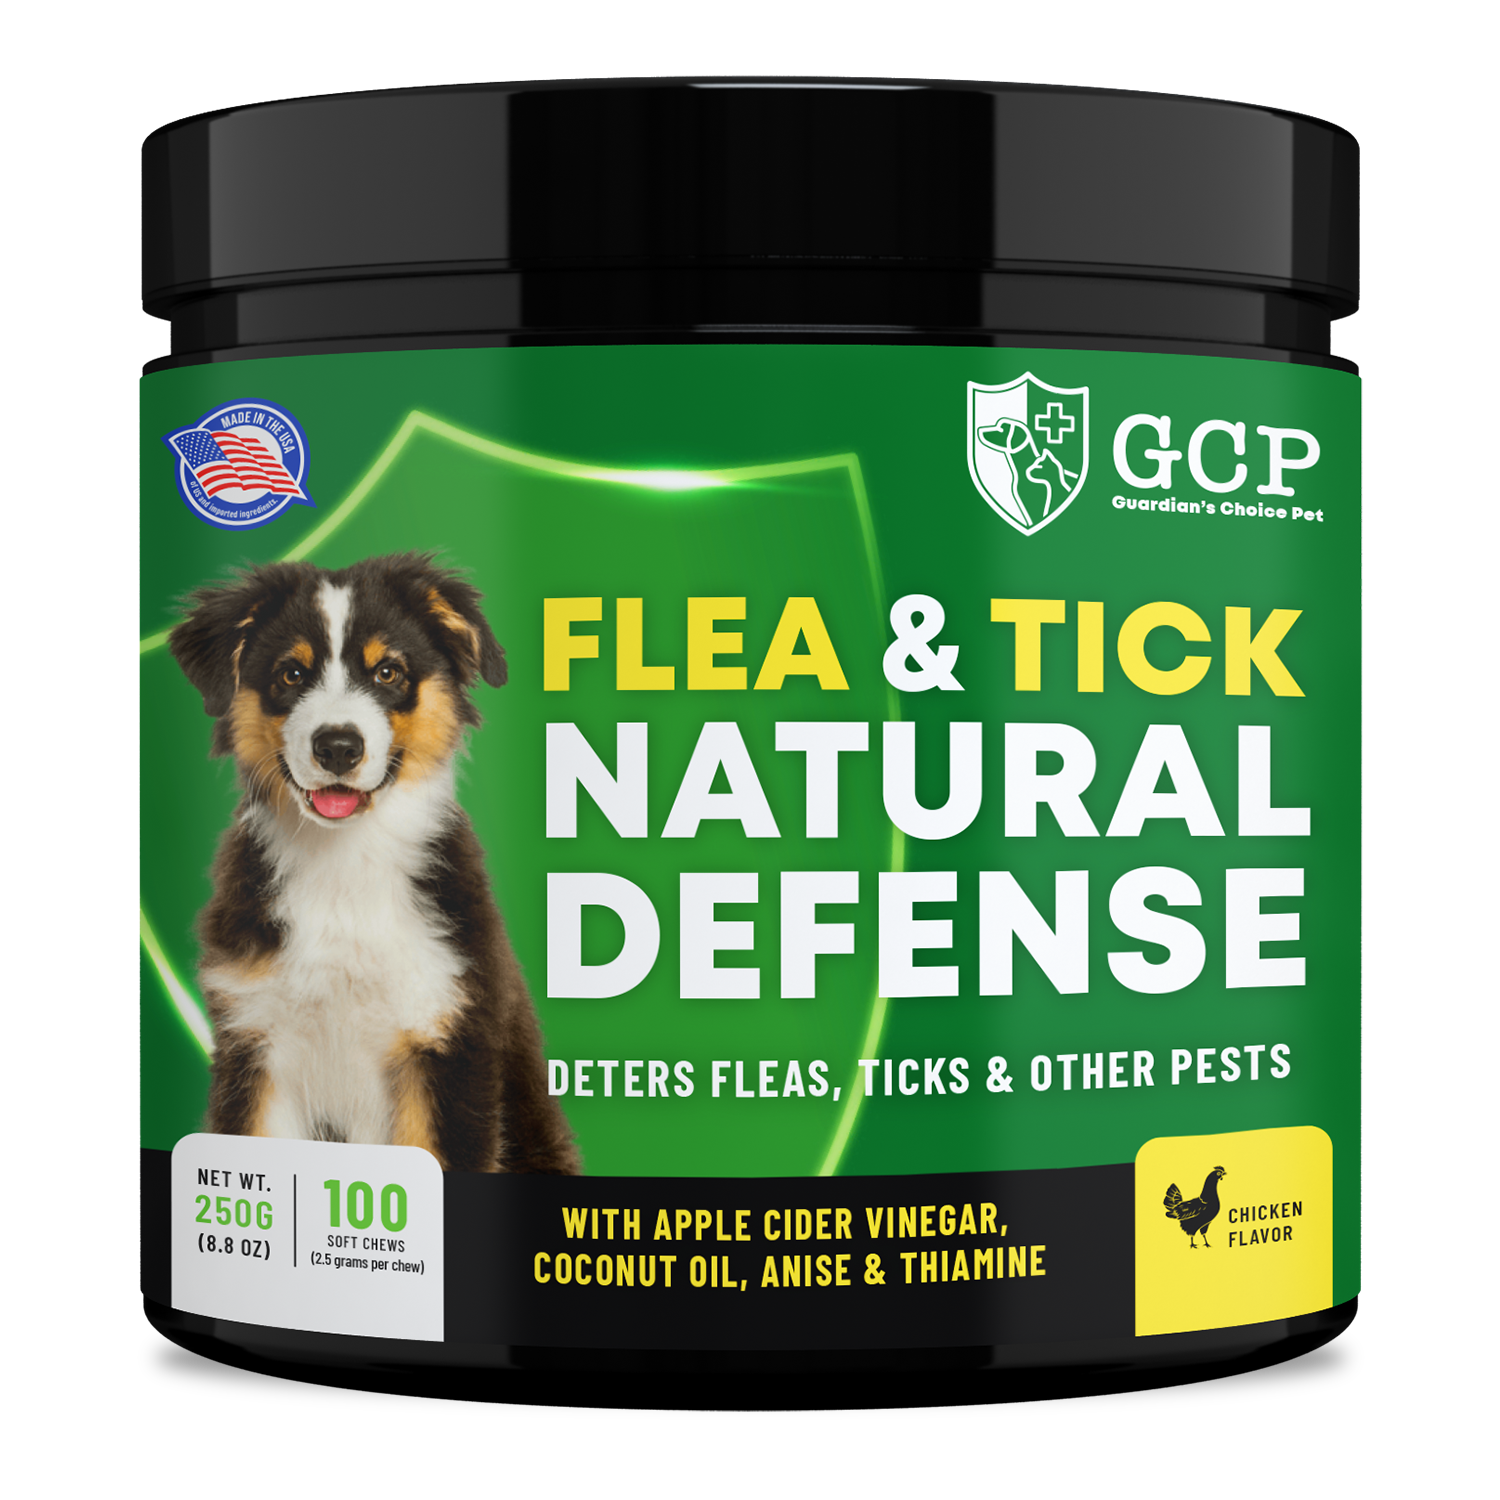 GCP Flea & Tick Natural Defense for Dogs - 100 Soft Chews